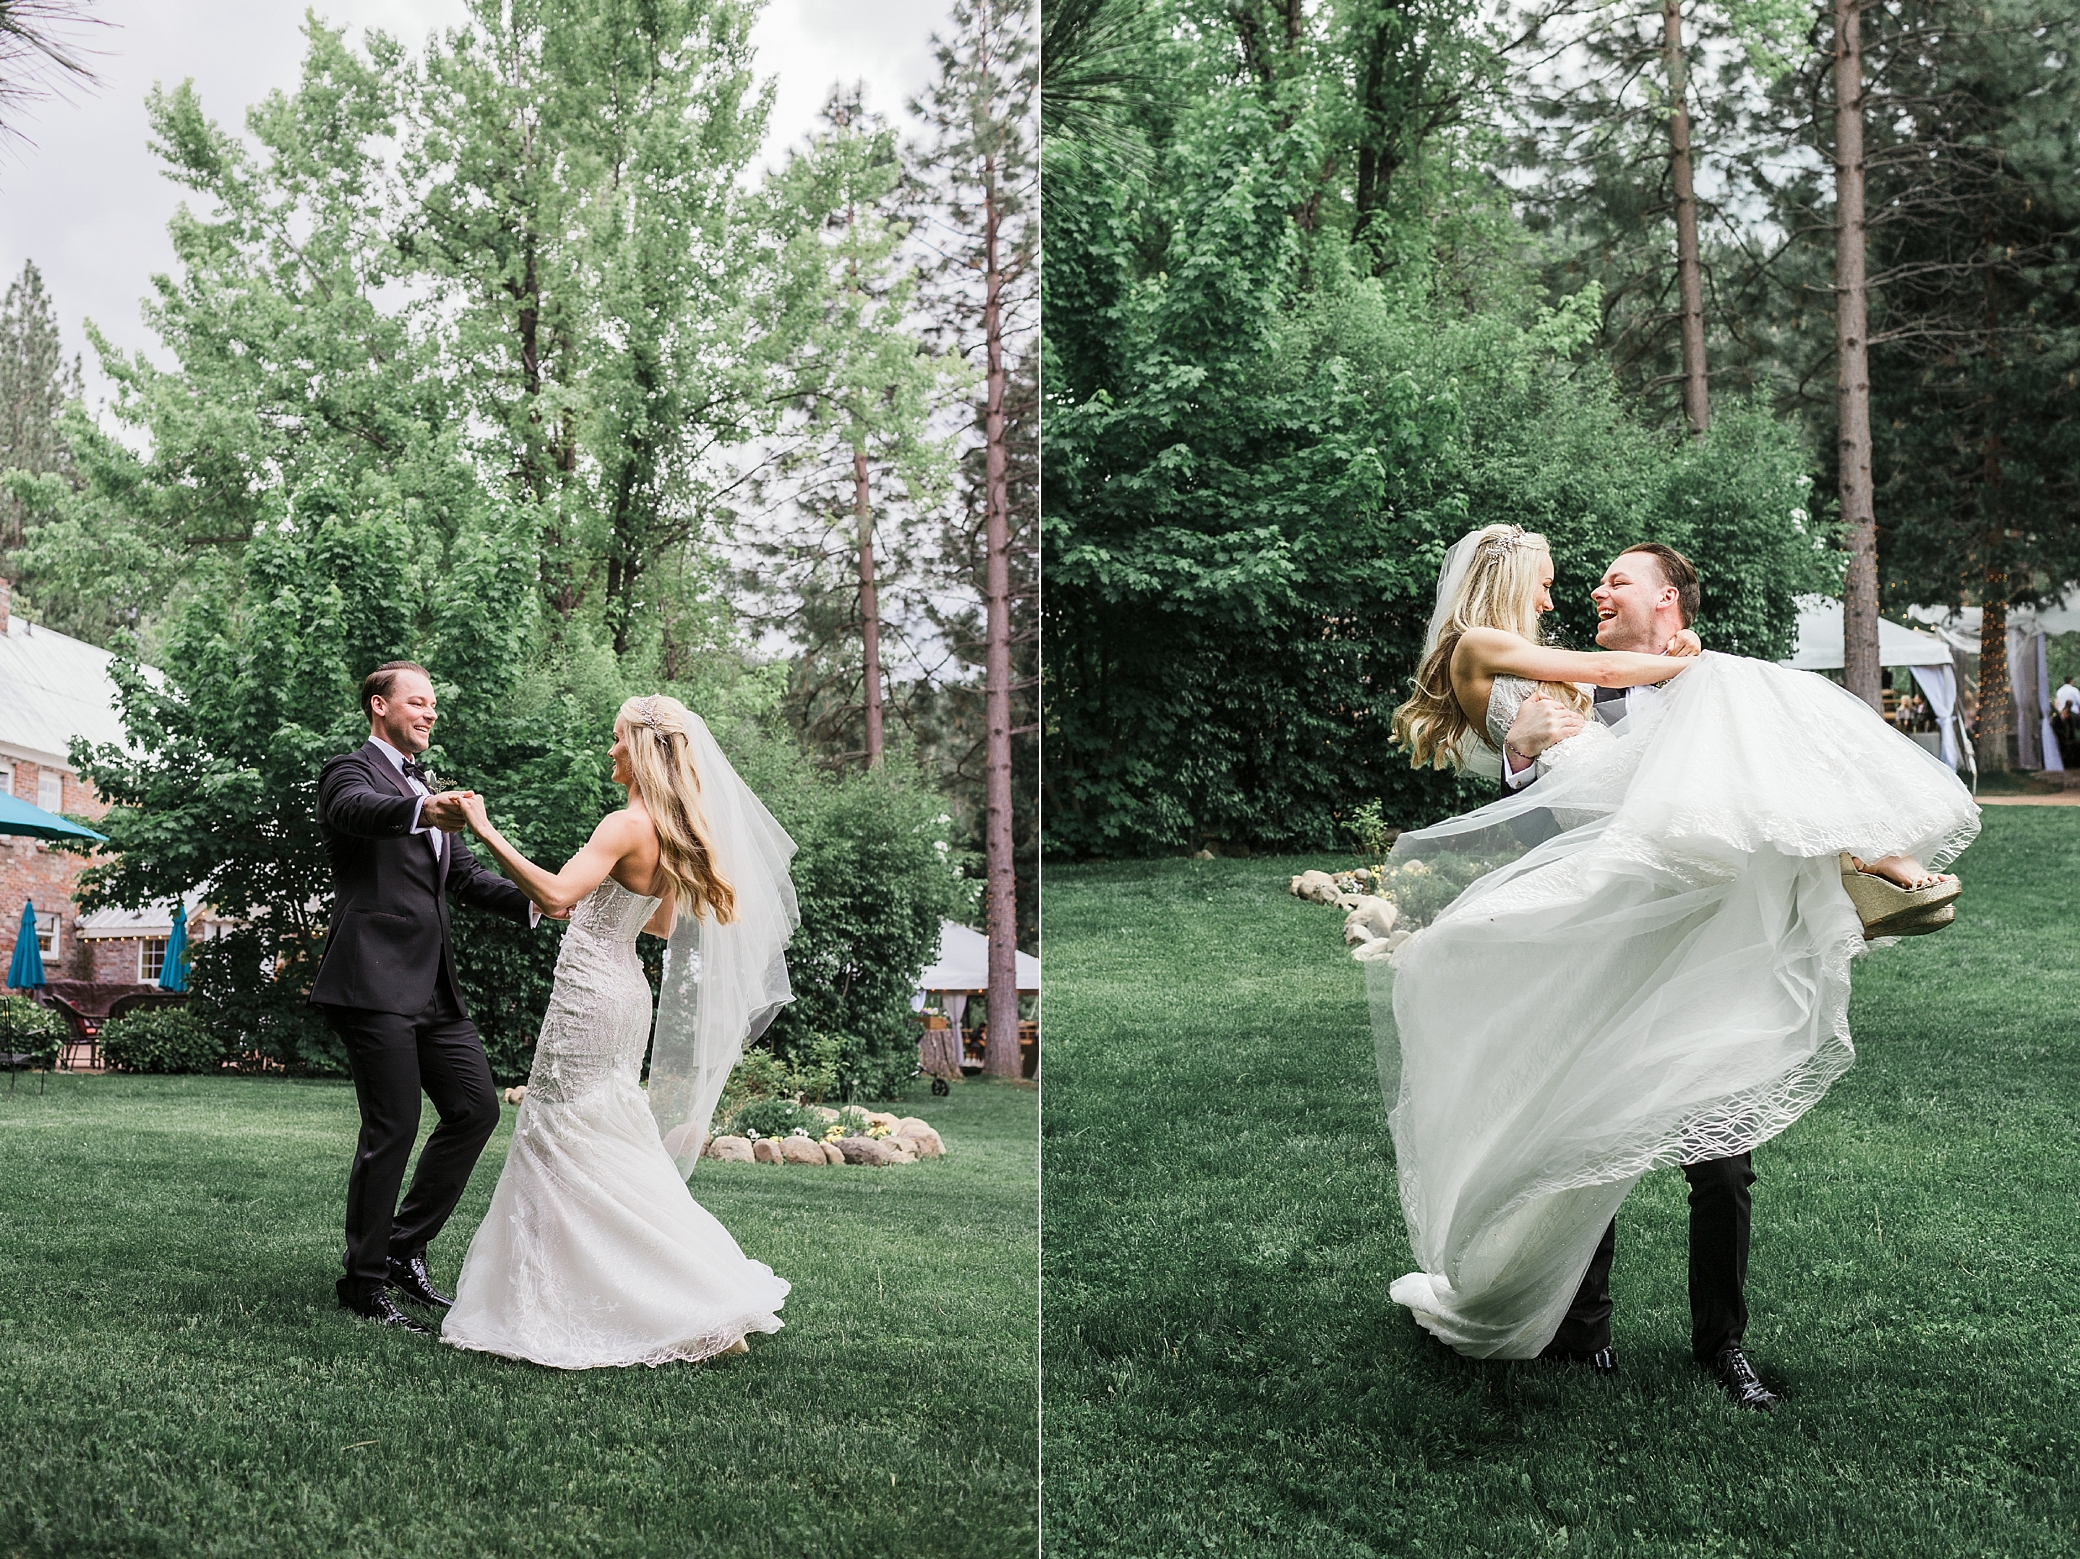 Bride and groom dancing | Megan Montalvo Photography 